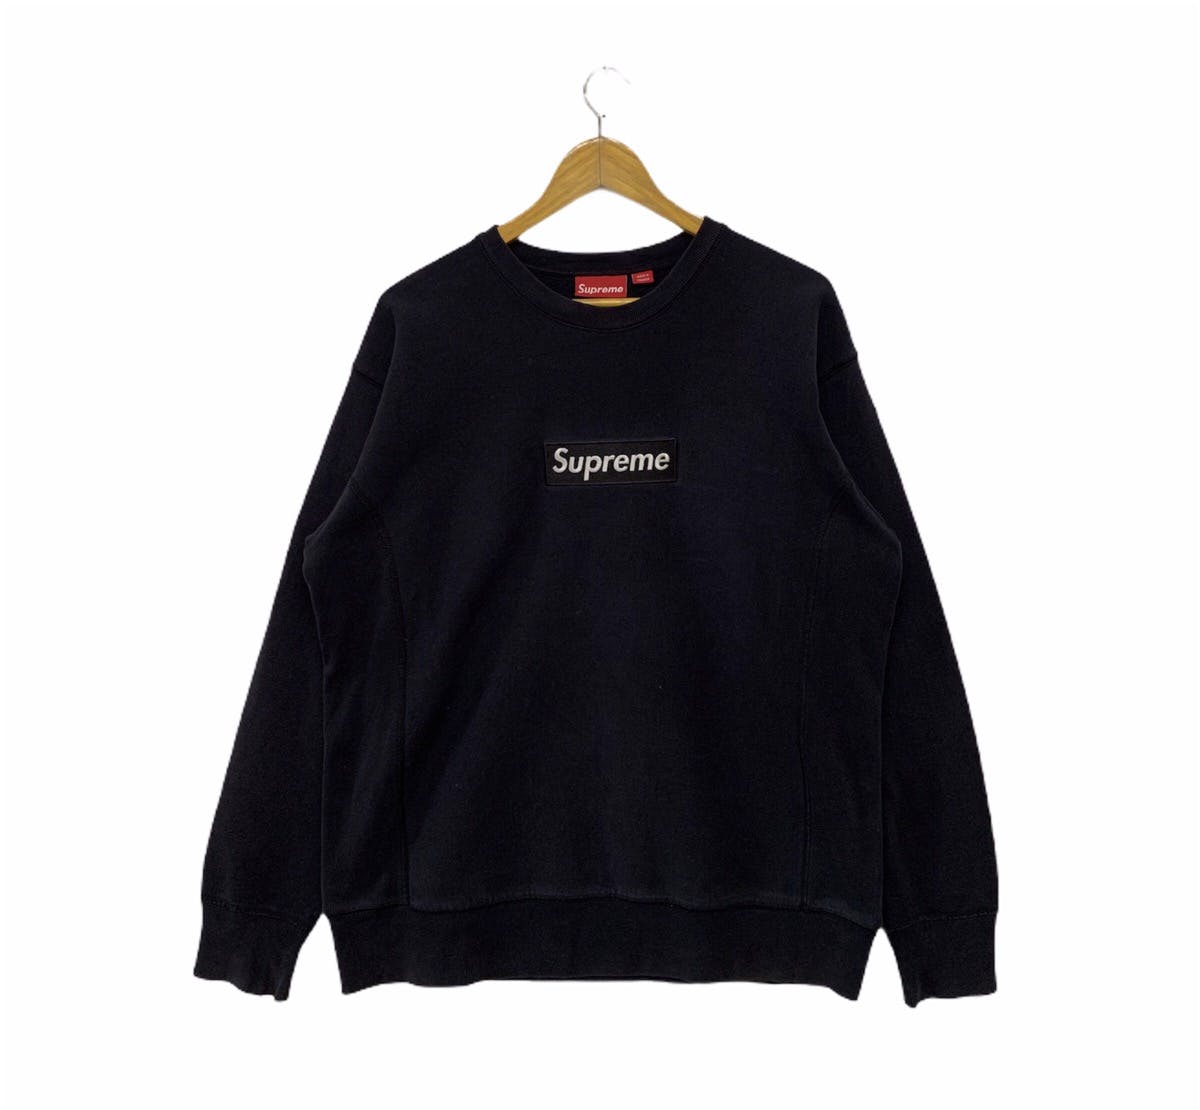 Vintage Supreme Box Logo Crewneck Black On Black Sweatshirt - 1